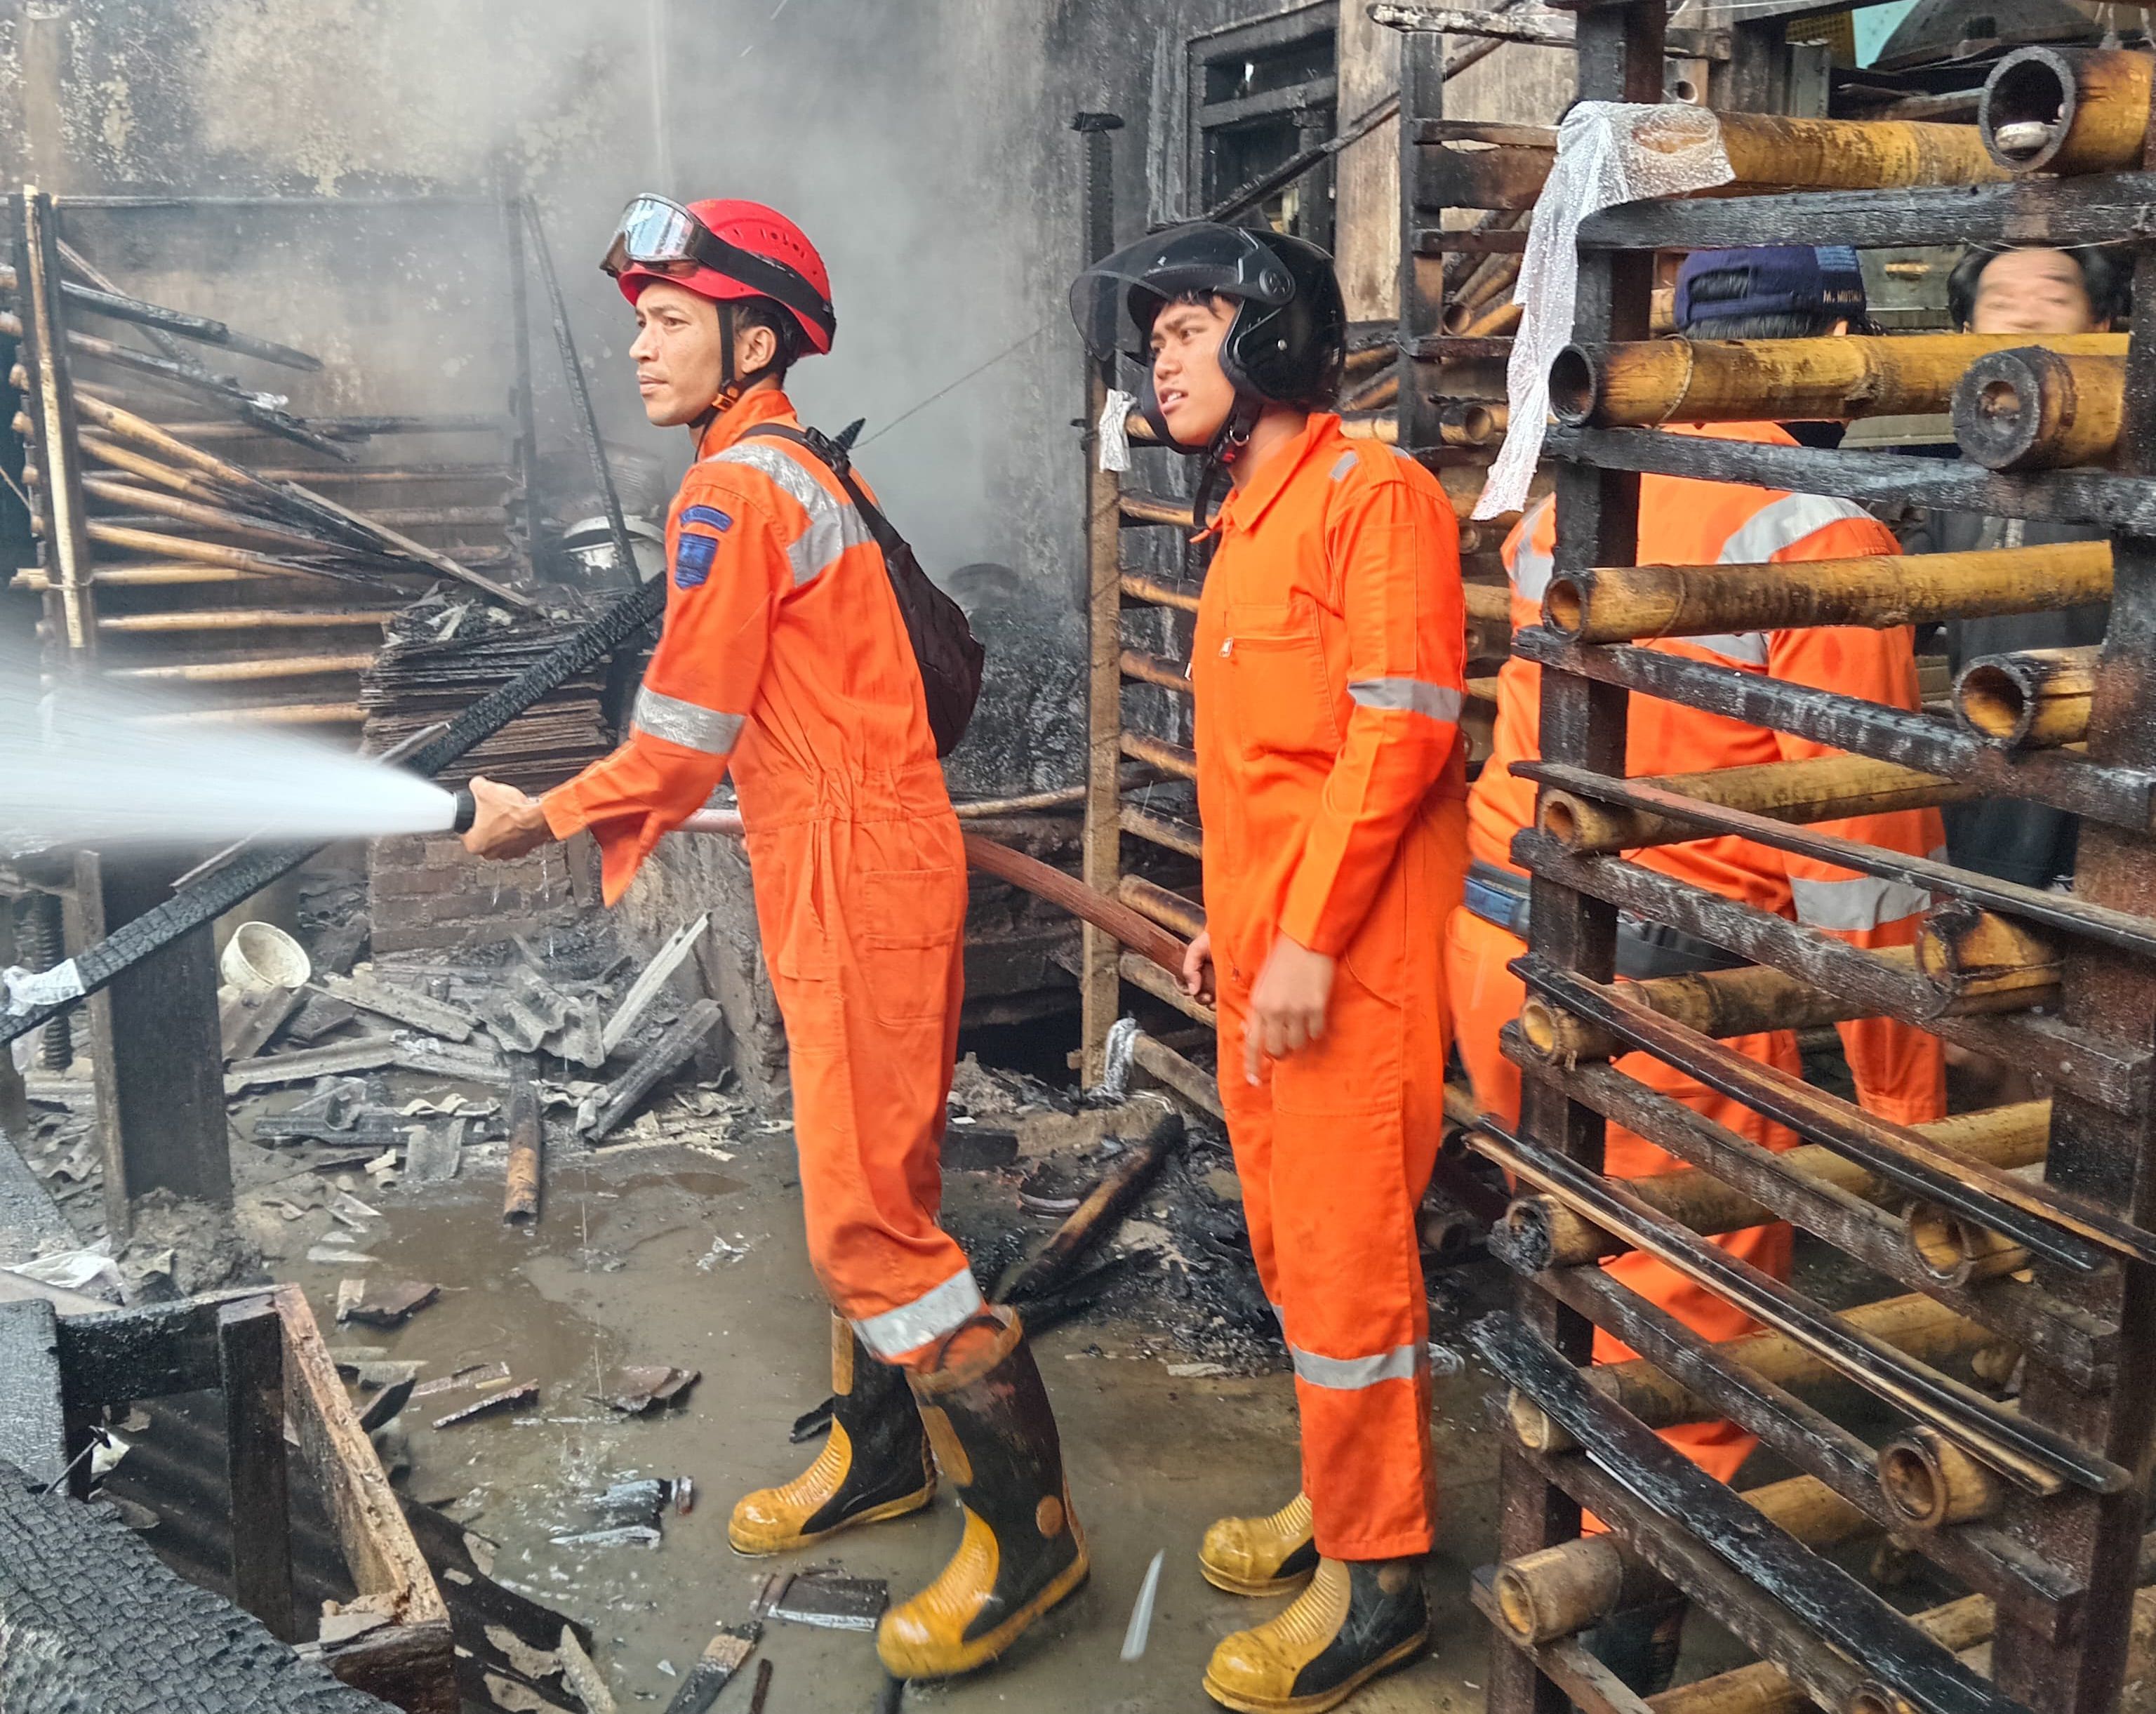 Cerobong Asap Terbakar, Pabrik Tahu di Kabupaten Semarang Ludes Dilalap Api